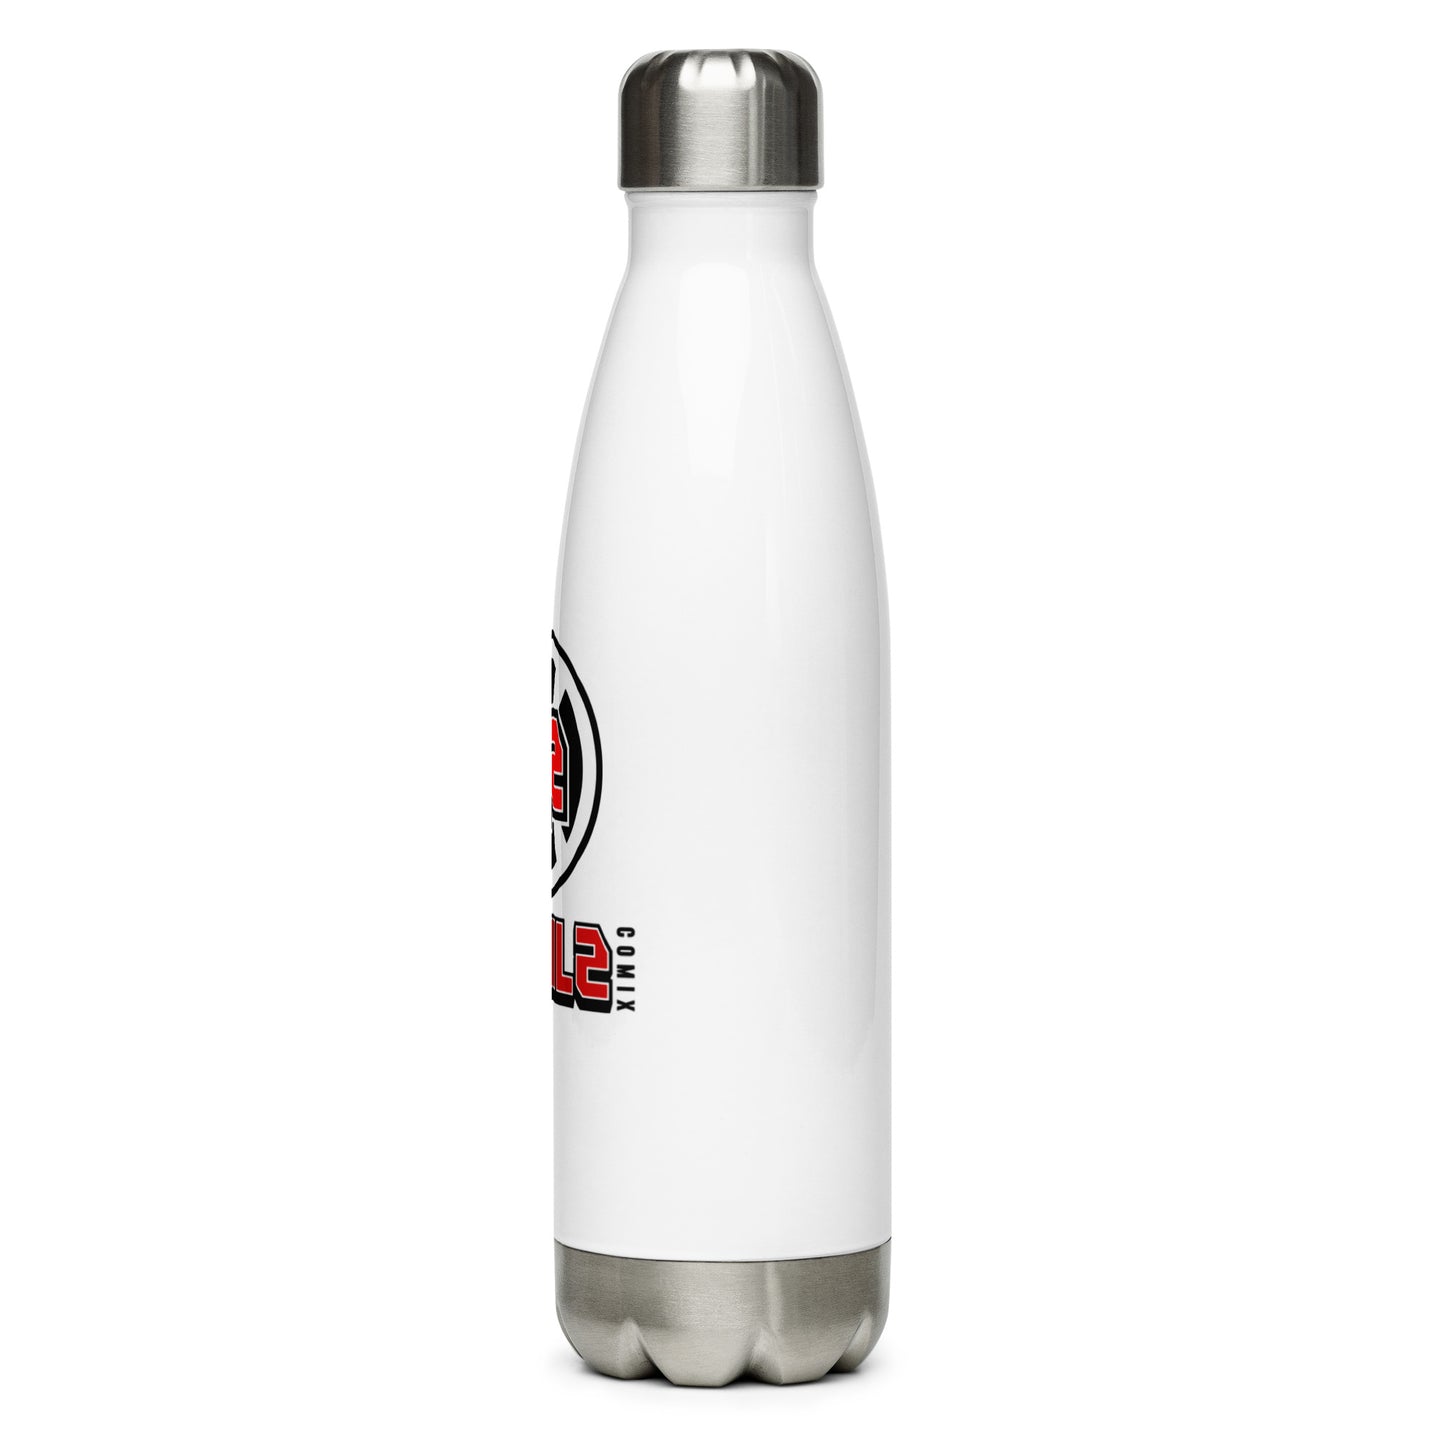 Grailz Comix Stainless Steel Water Bottle